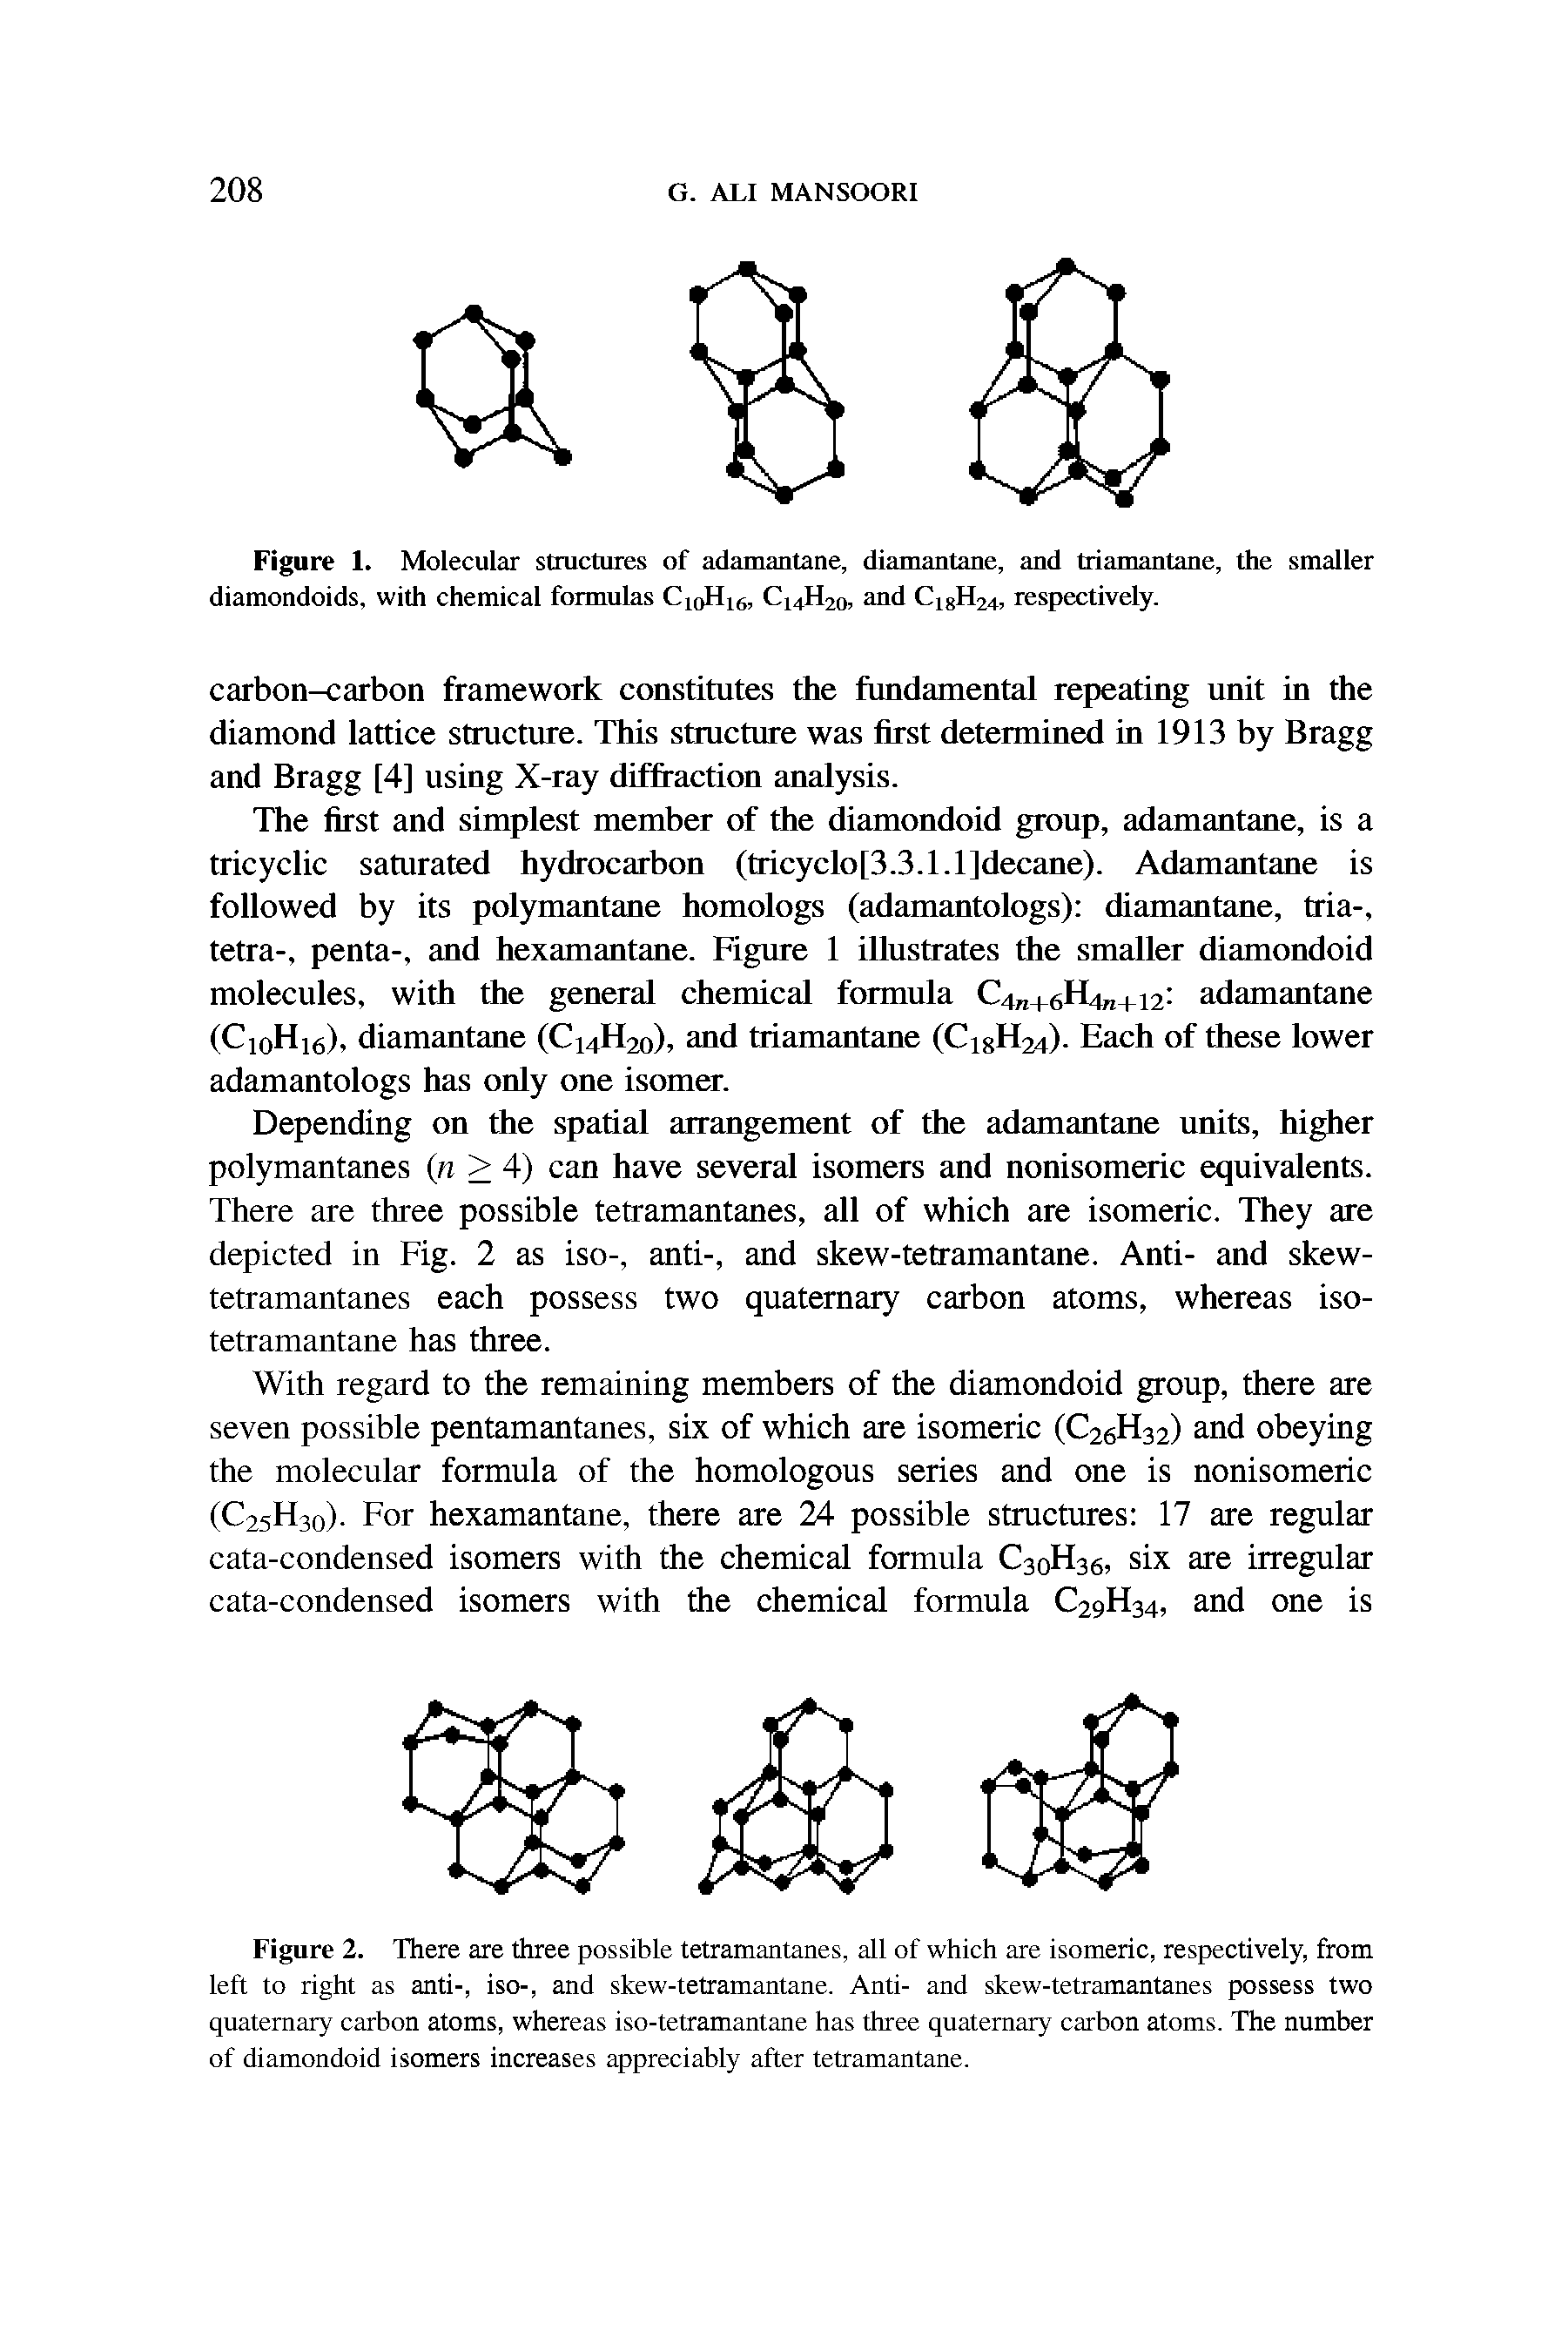 Figure 1, Molecular structures of adamantane, diamantane, and triamantane, the smaller diamondoids, with chemical formulas C10H16, C14H20, and CigH24, respectively.